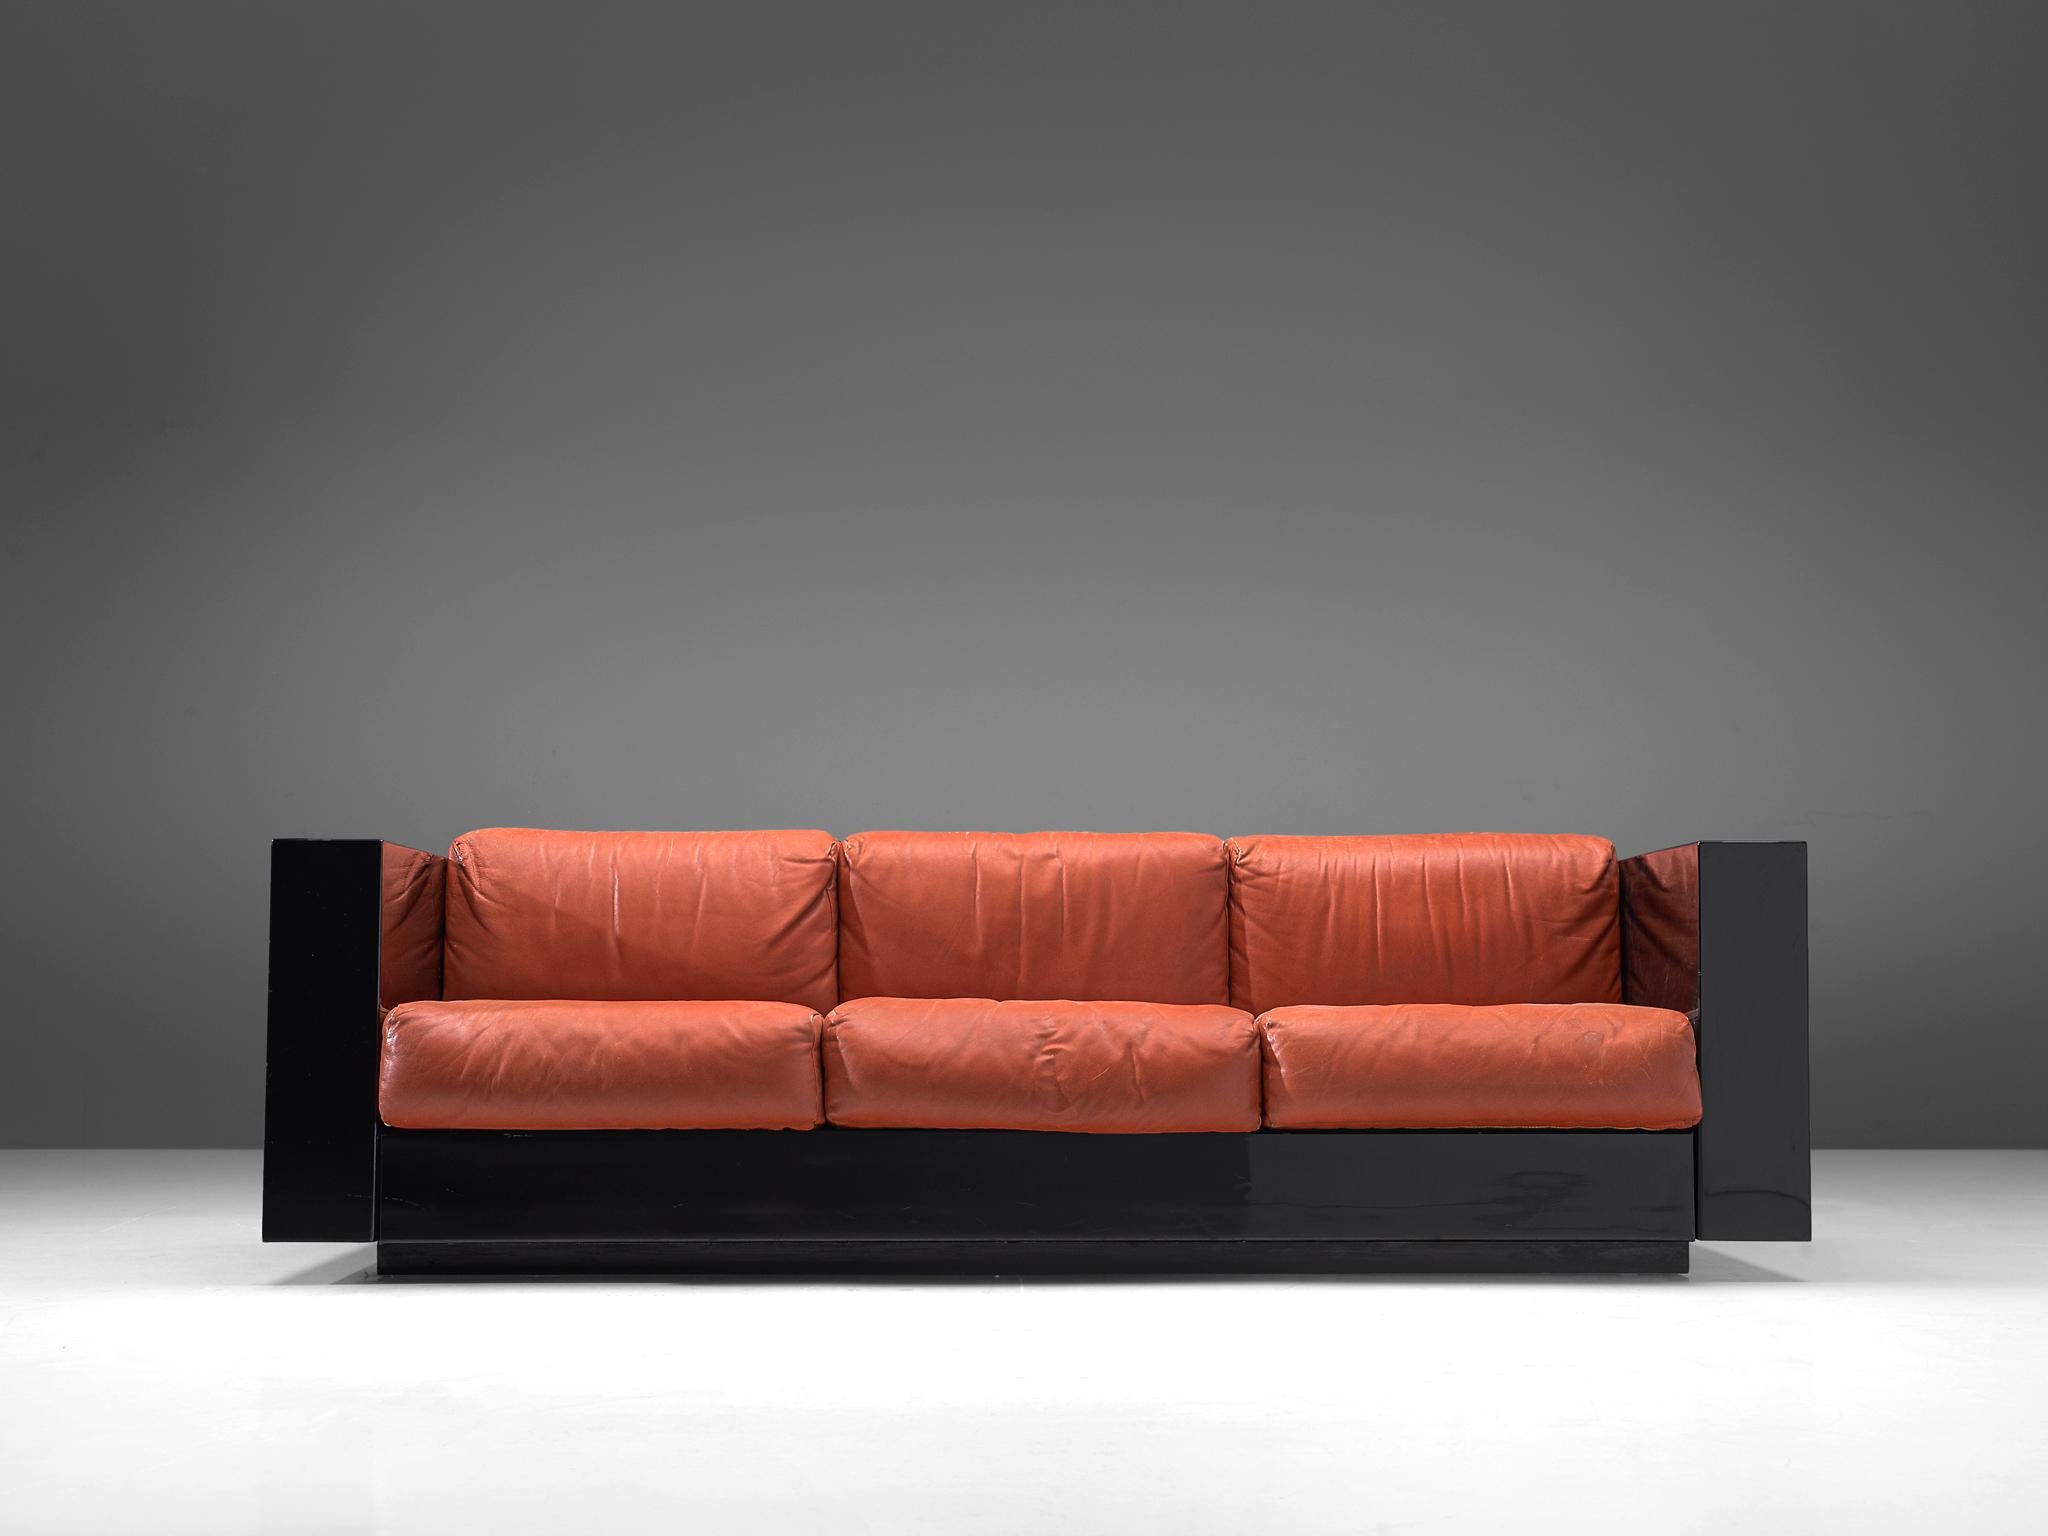 Massimo and Lella Vignelli for Poltronova, 'Saratoga' three-seat sofa, polyester lacquer and red leather, Italy, 1964.

This three-seat sofa named 'Saratoga' is designed by Italian designer couple Lella & Massimo Vignelli. The Vignelli's were